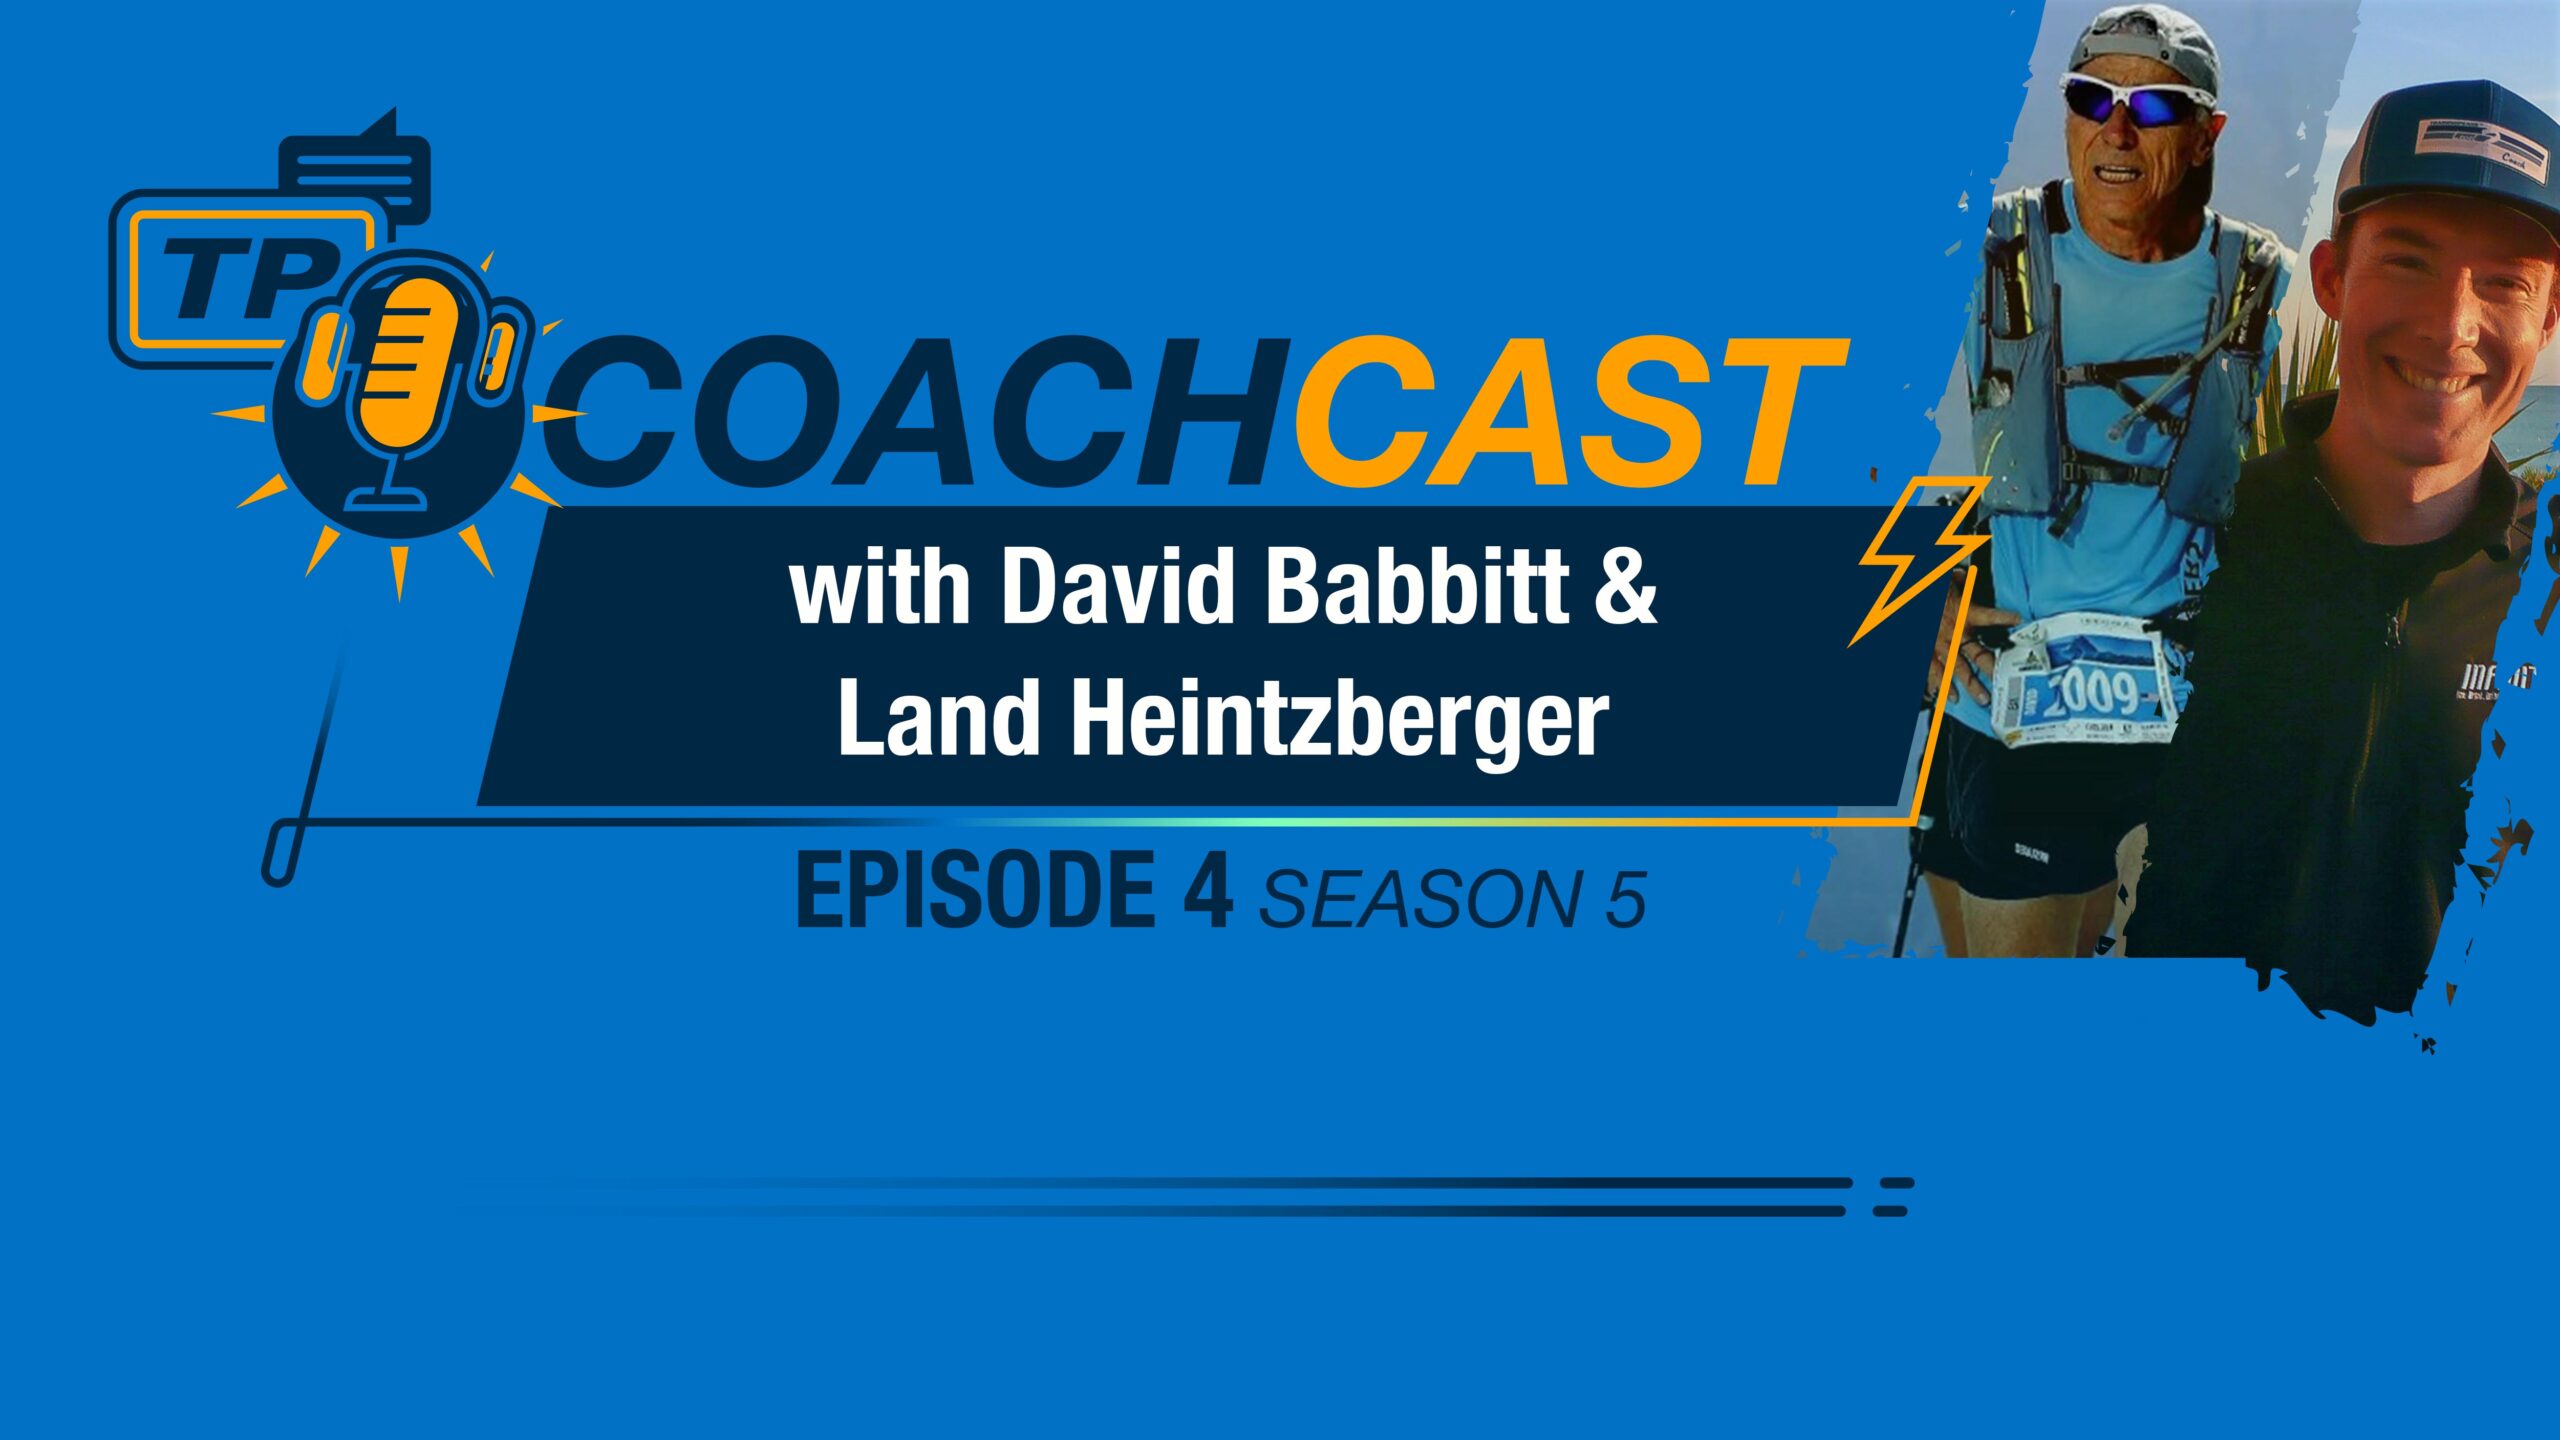 David Babbitt And Land Heintzberger On Coachcast